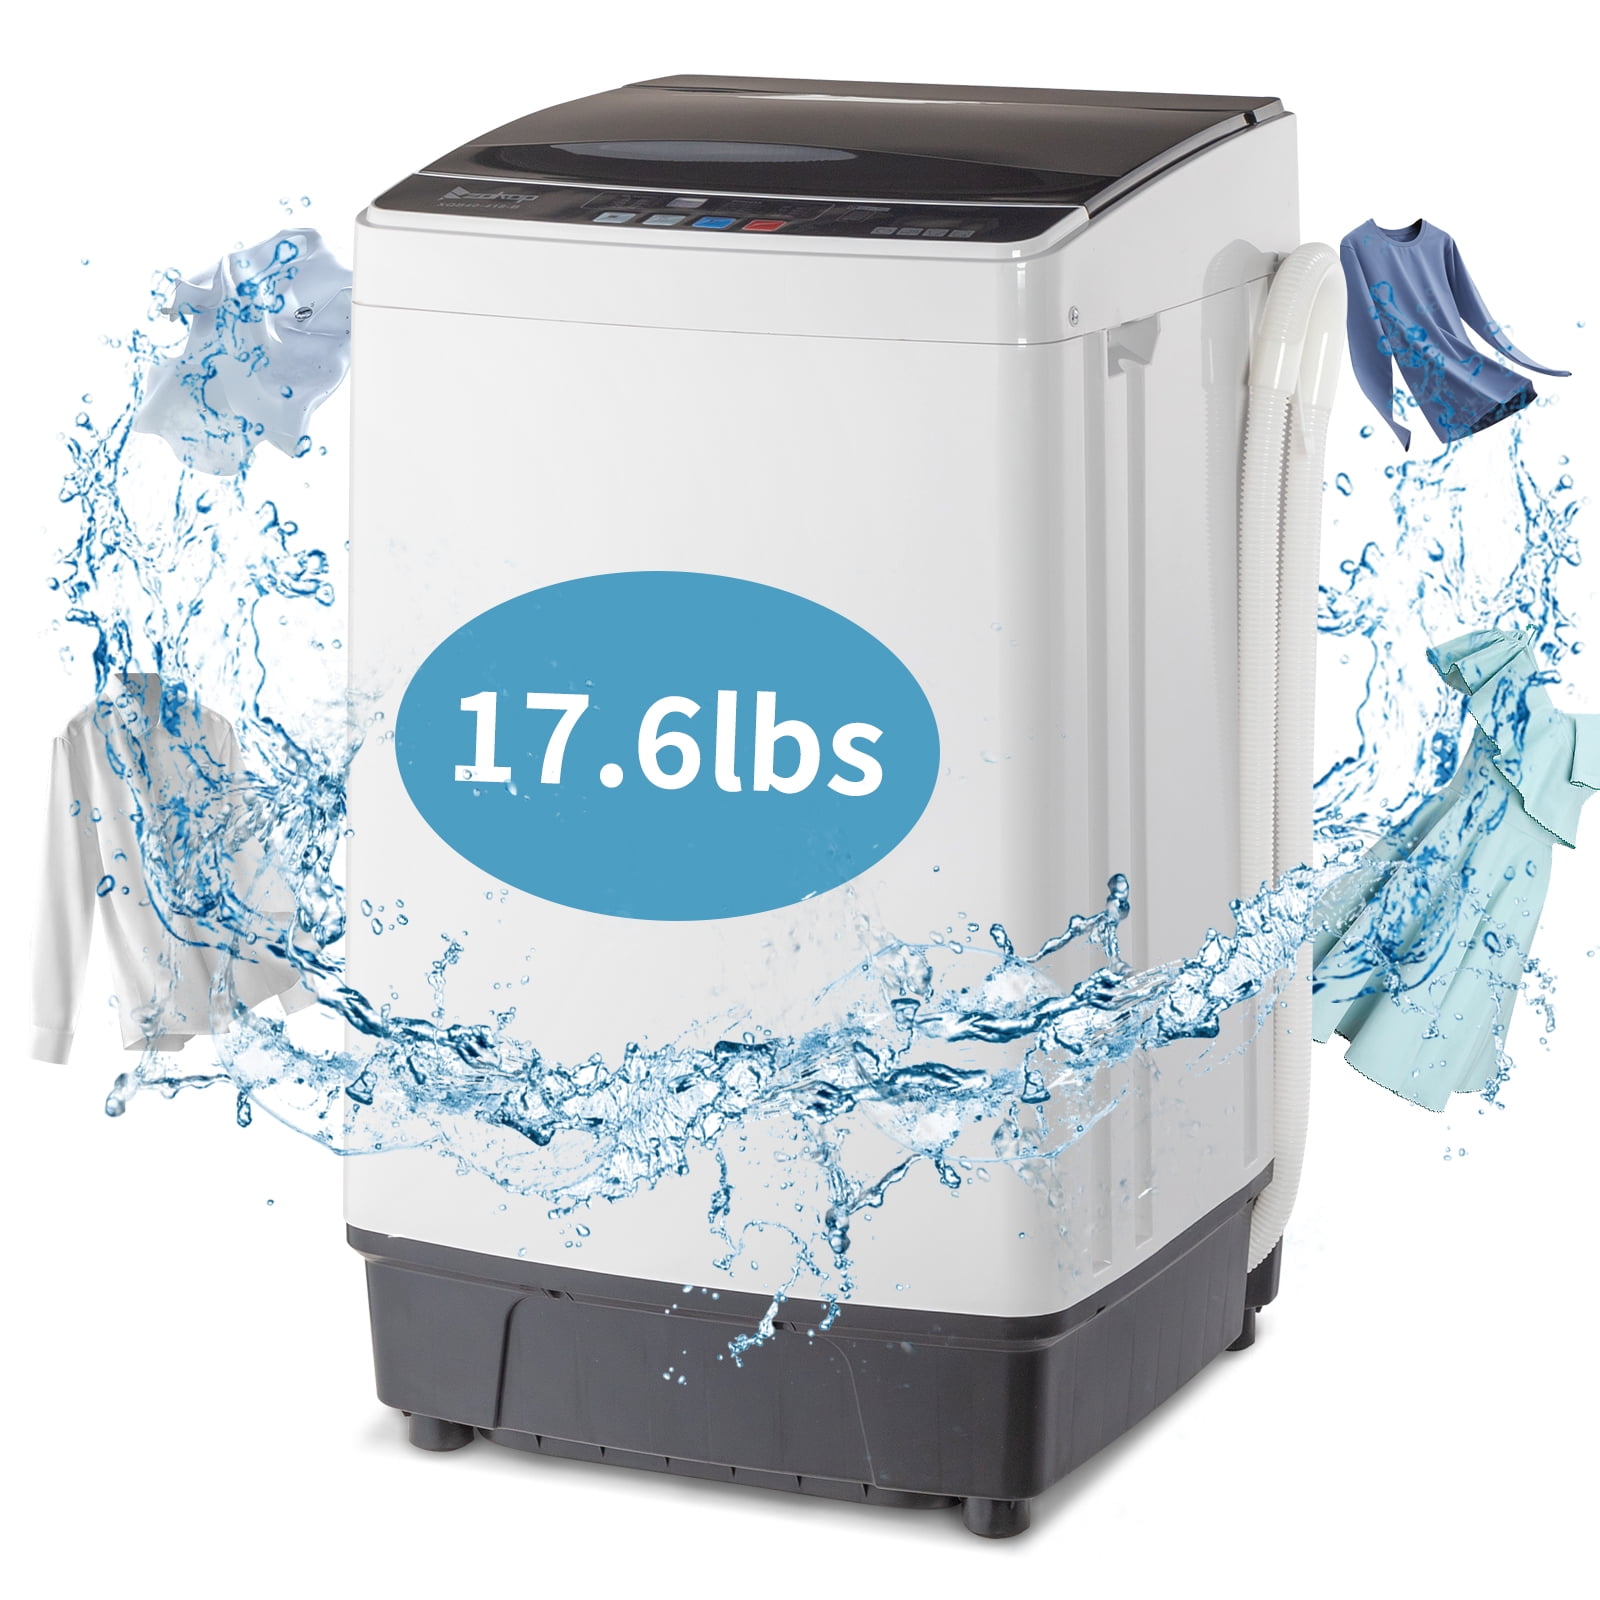 Ktaxon 13.4lbs Portable Mini Washing Machine Compact Twin Tub Wash